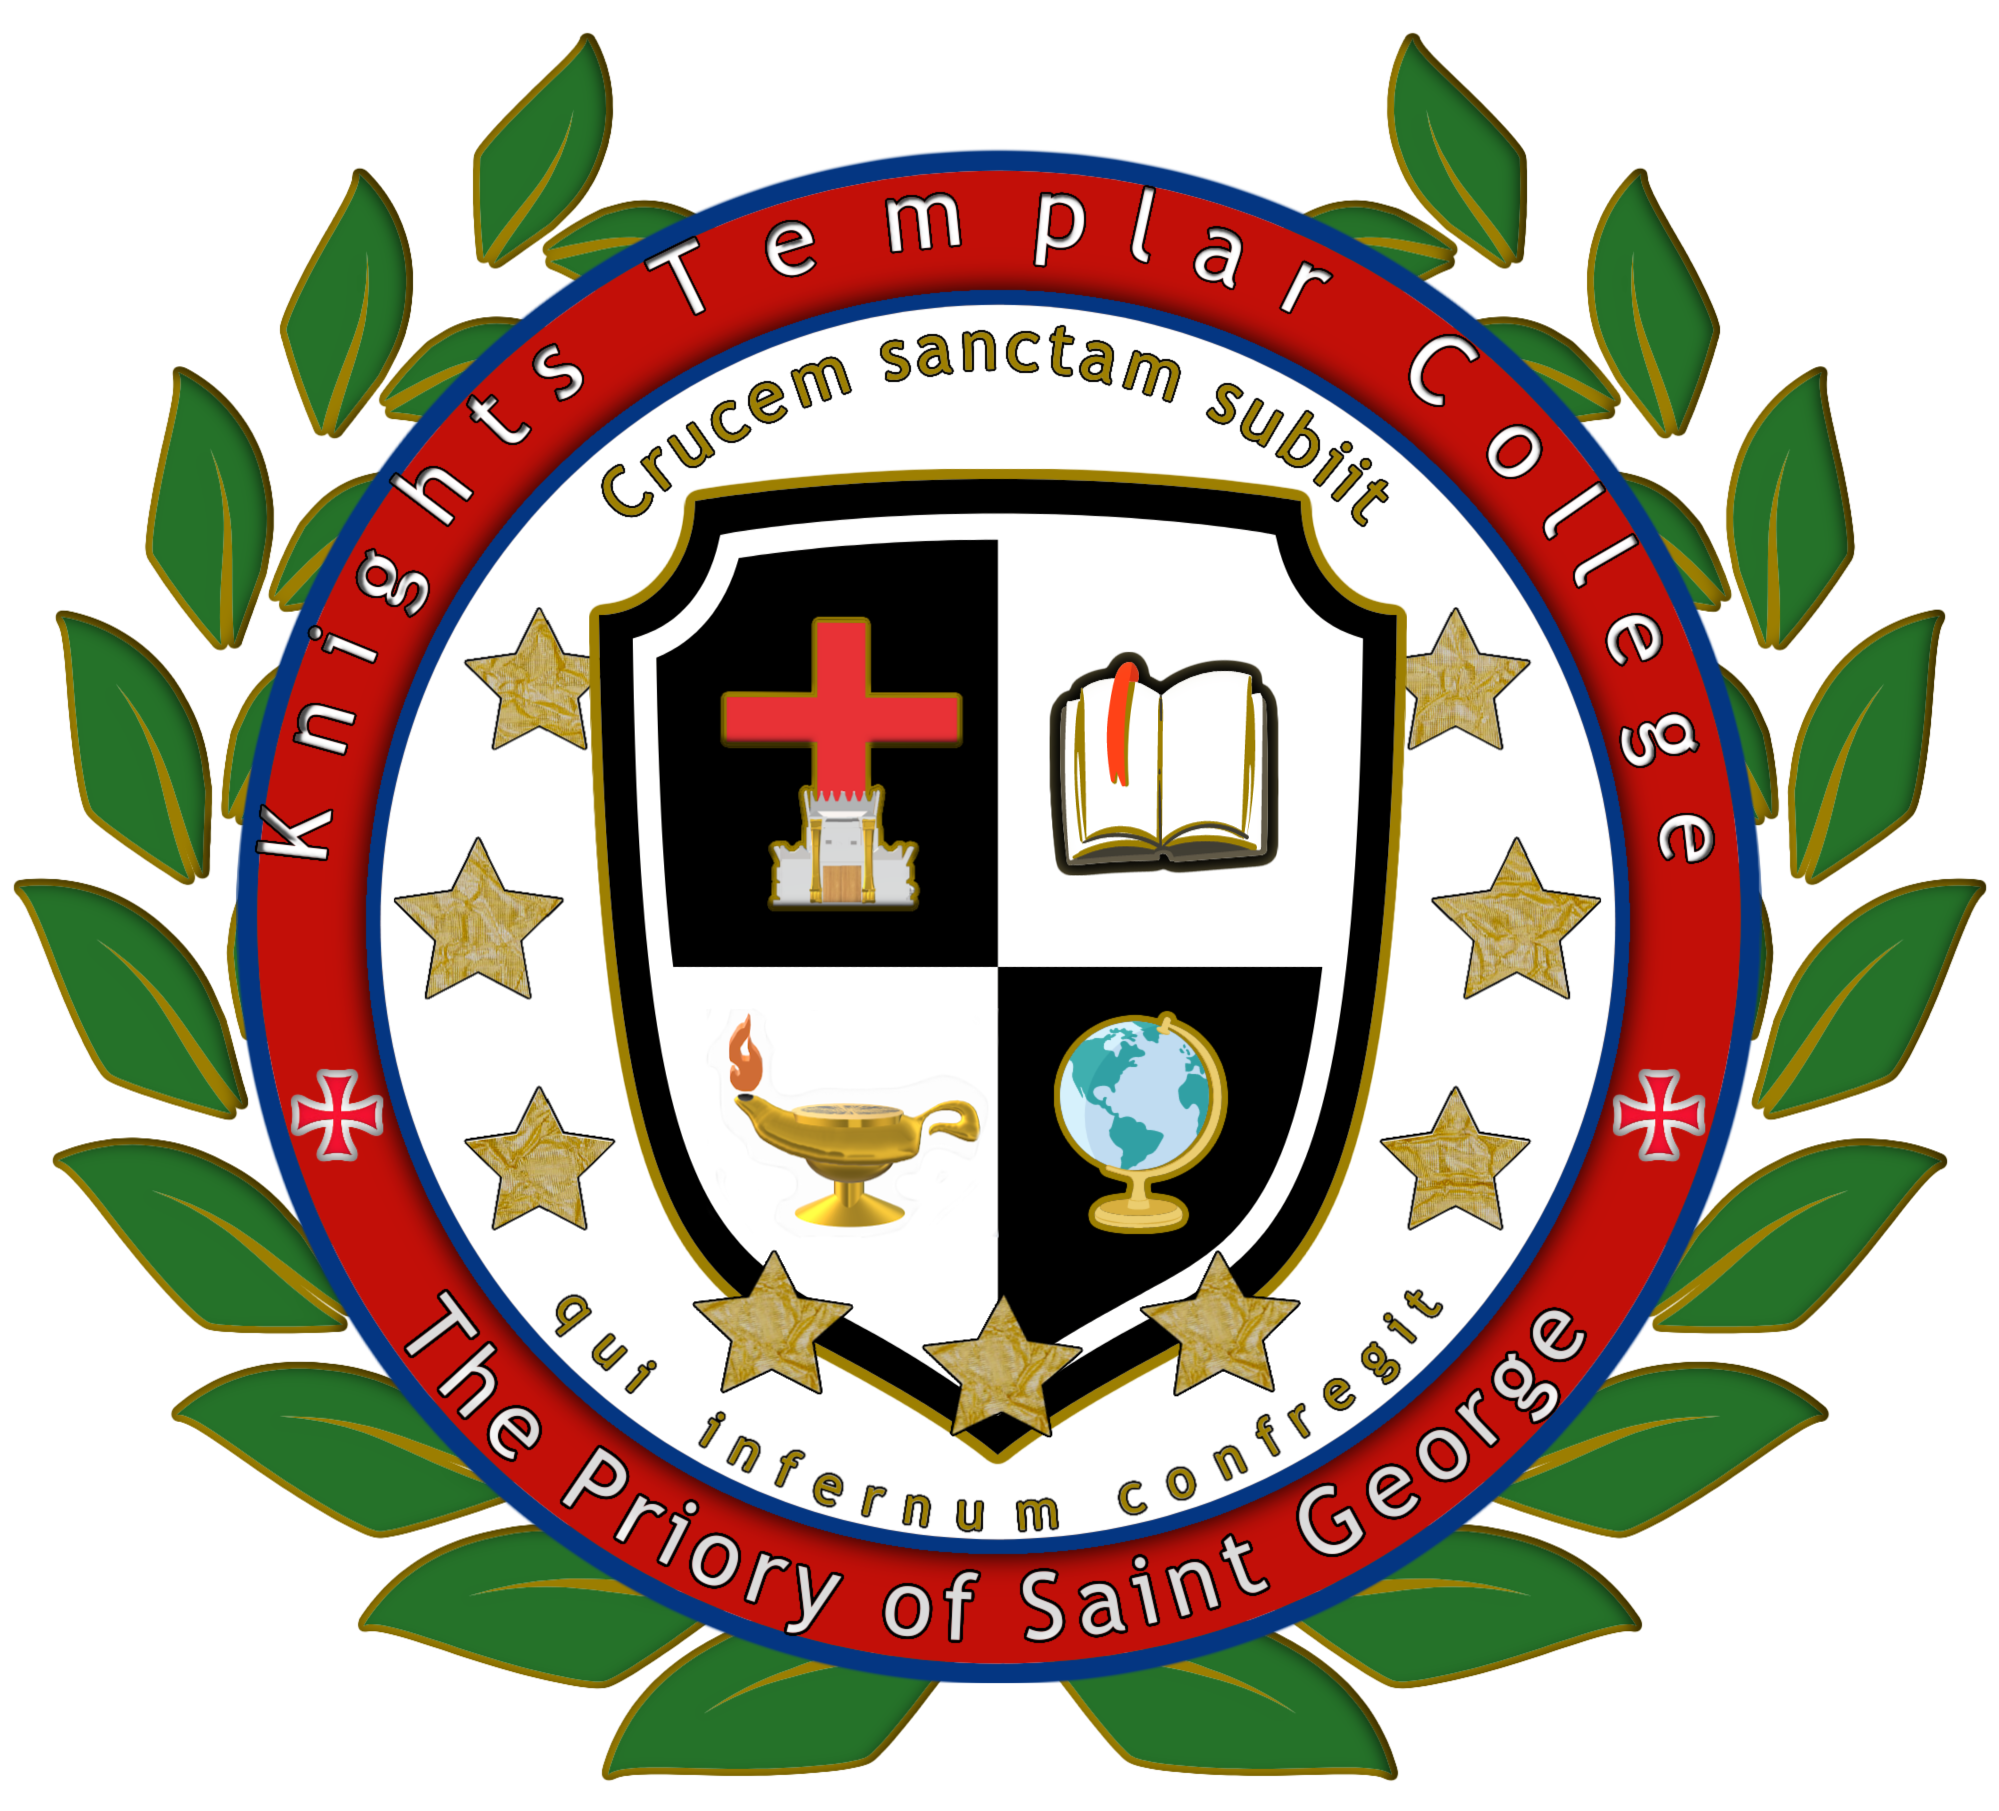 Knights Templar College